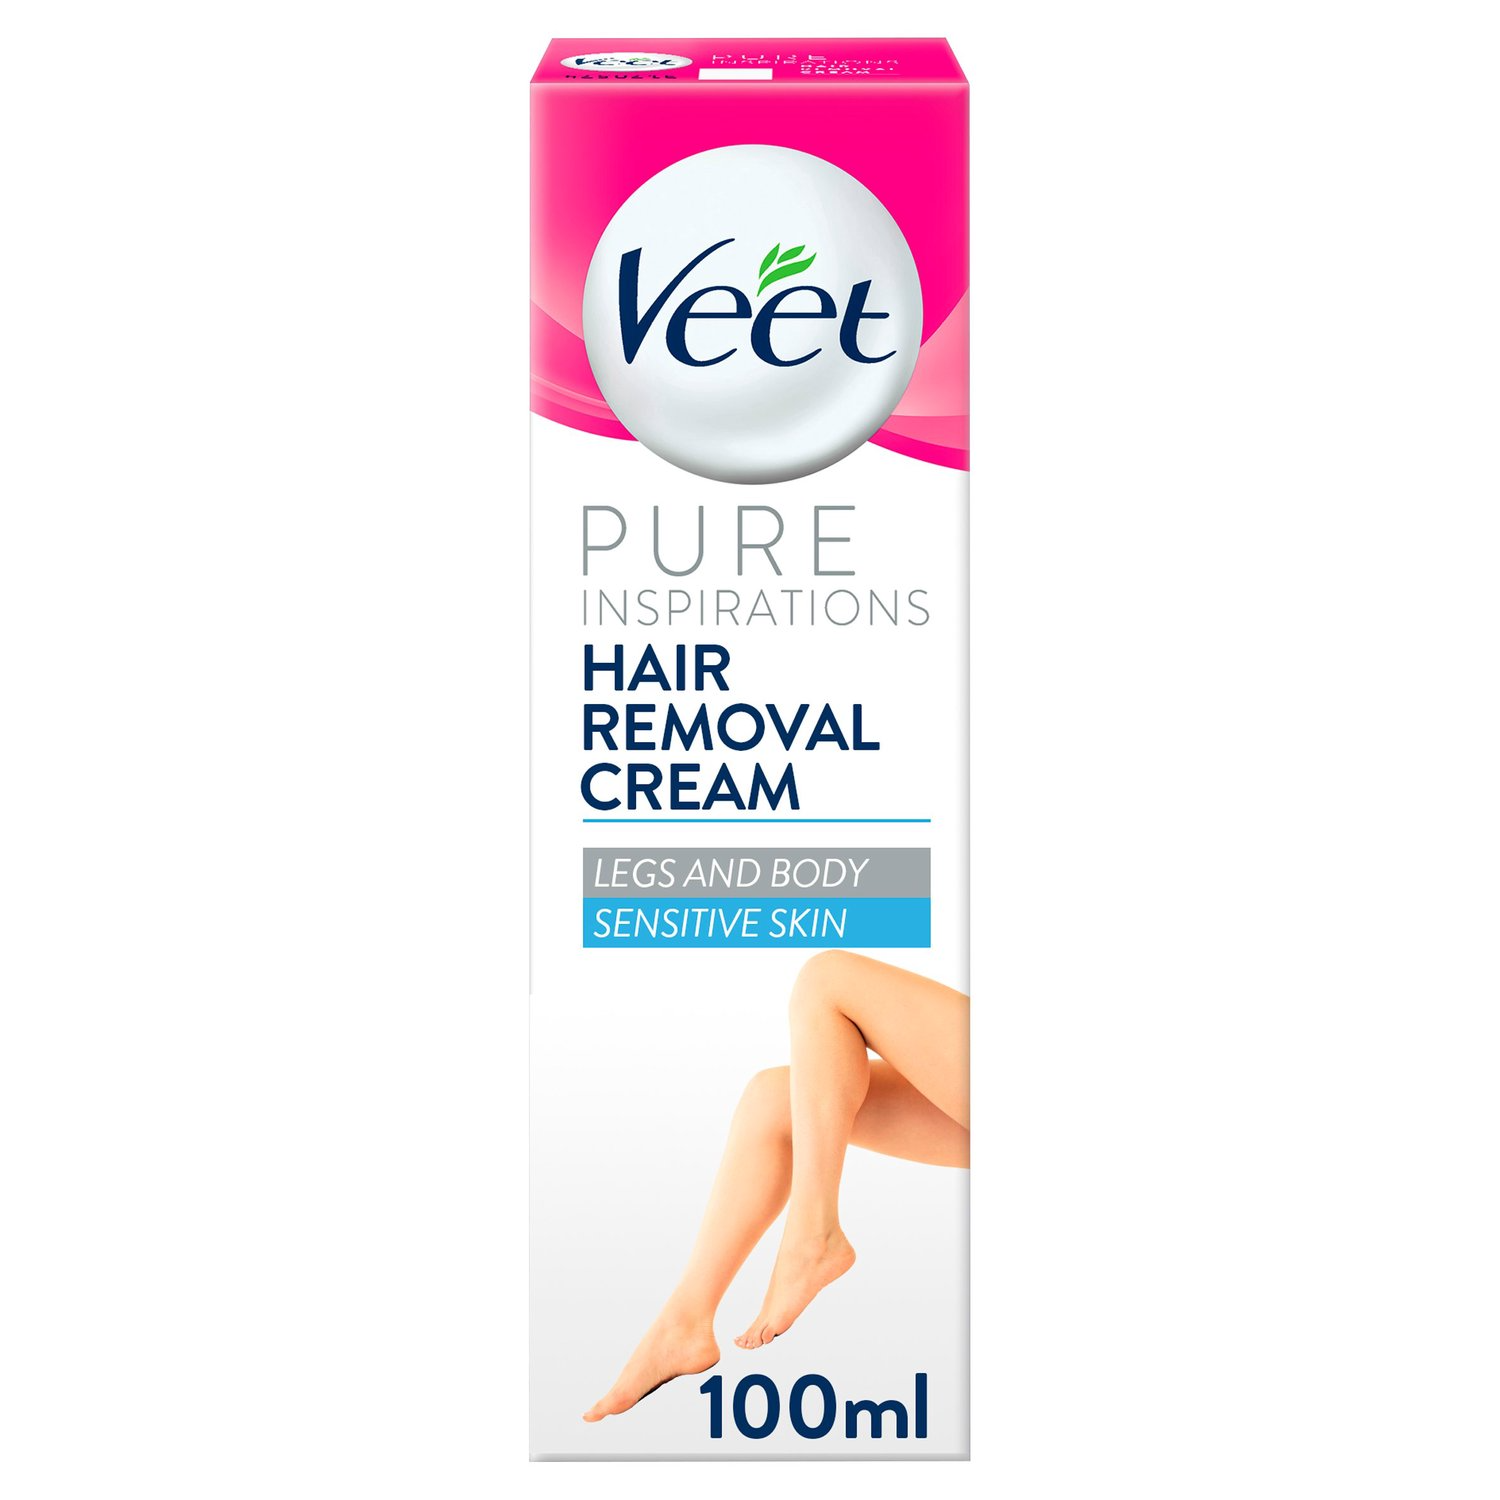 6.Veet Pure Inspirations Hair Removal Cream for Sensitive Skin Body &amp; Legs €7, 